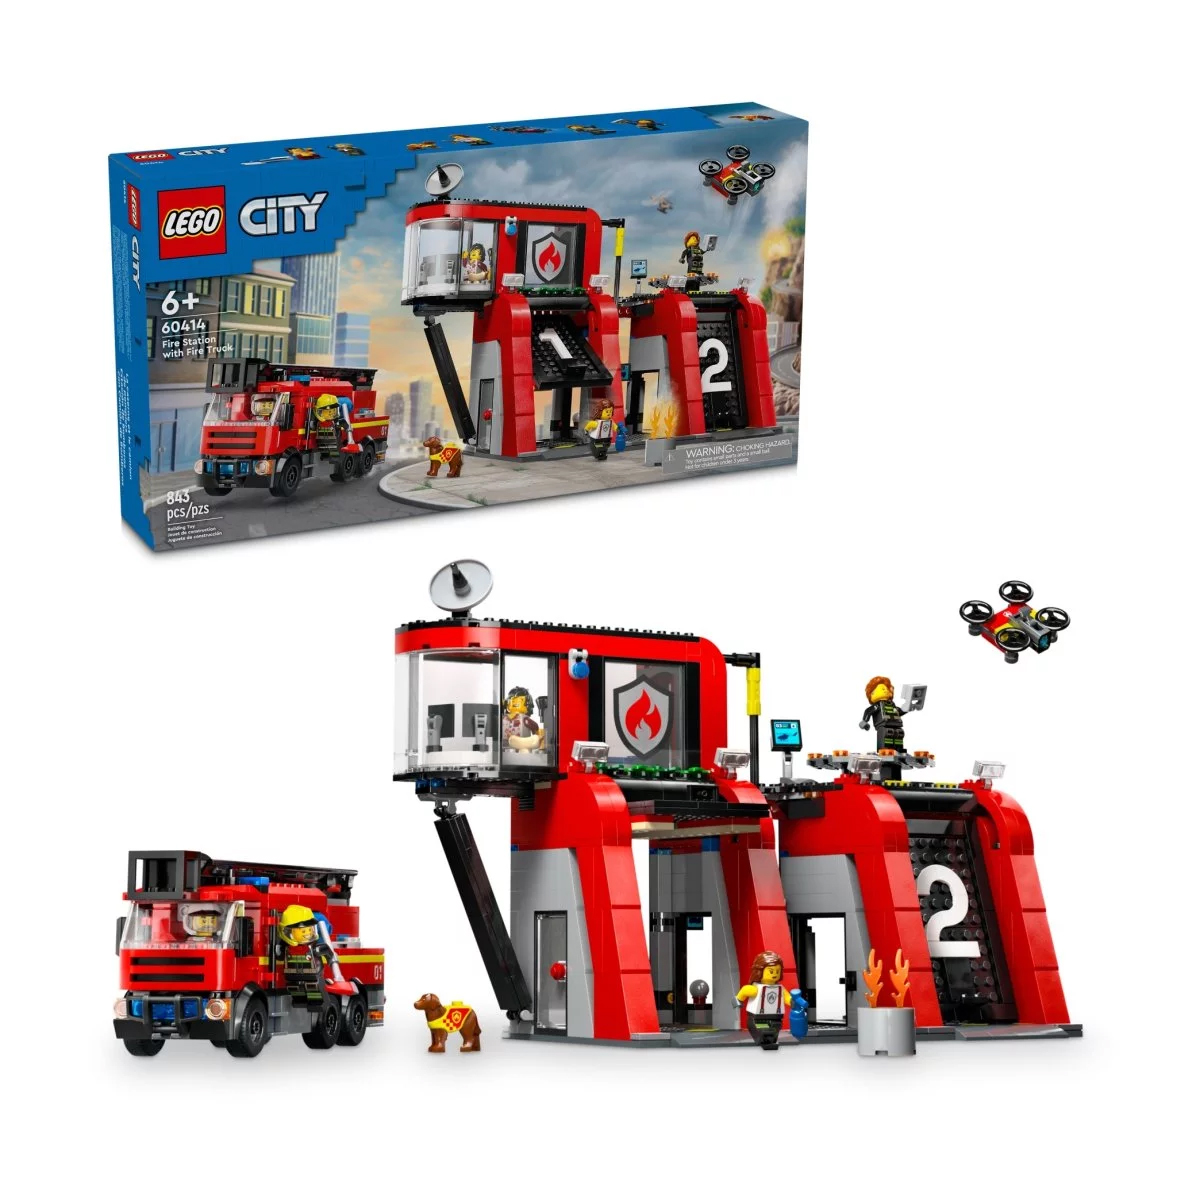 Конструктор Lego City Fire Station with Fire Truck 60414, 843 детали конструктор lego 60320 city fire station пожарная станция